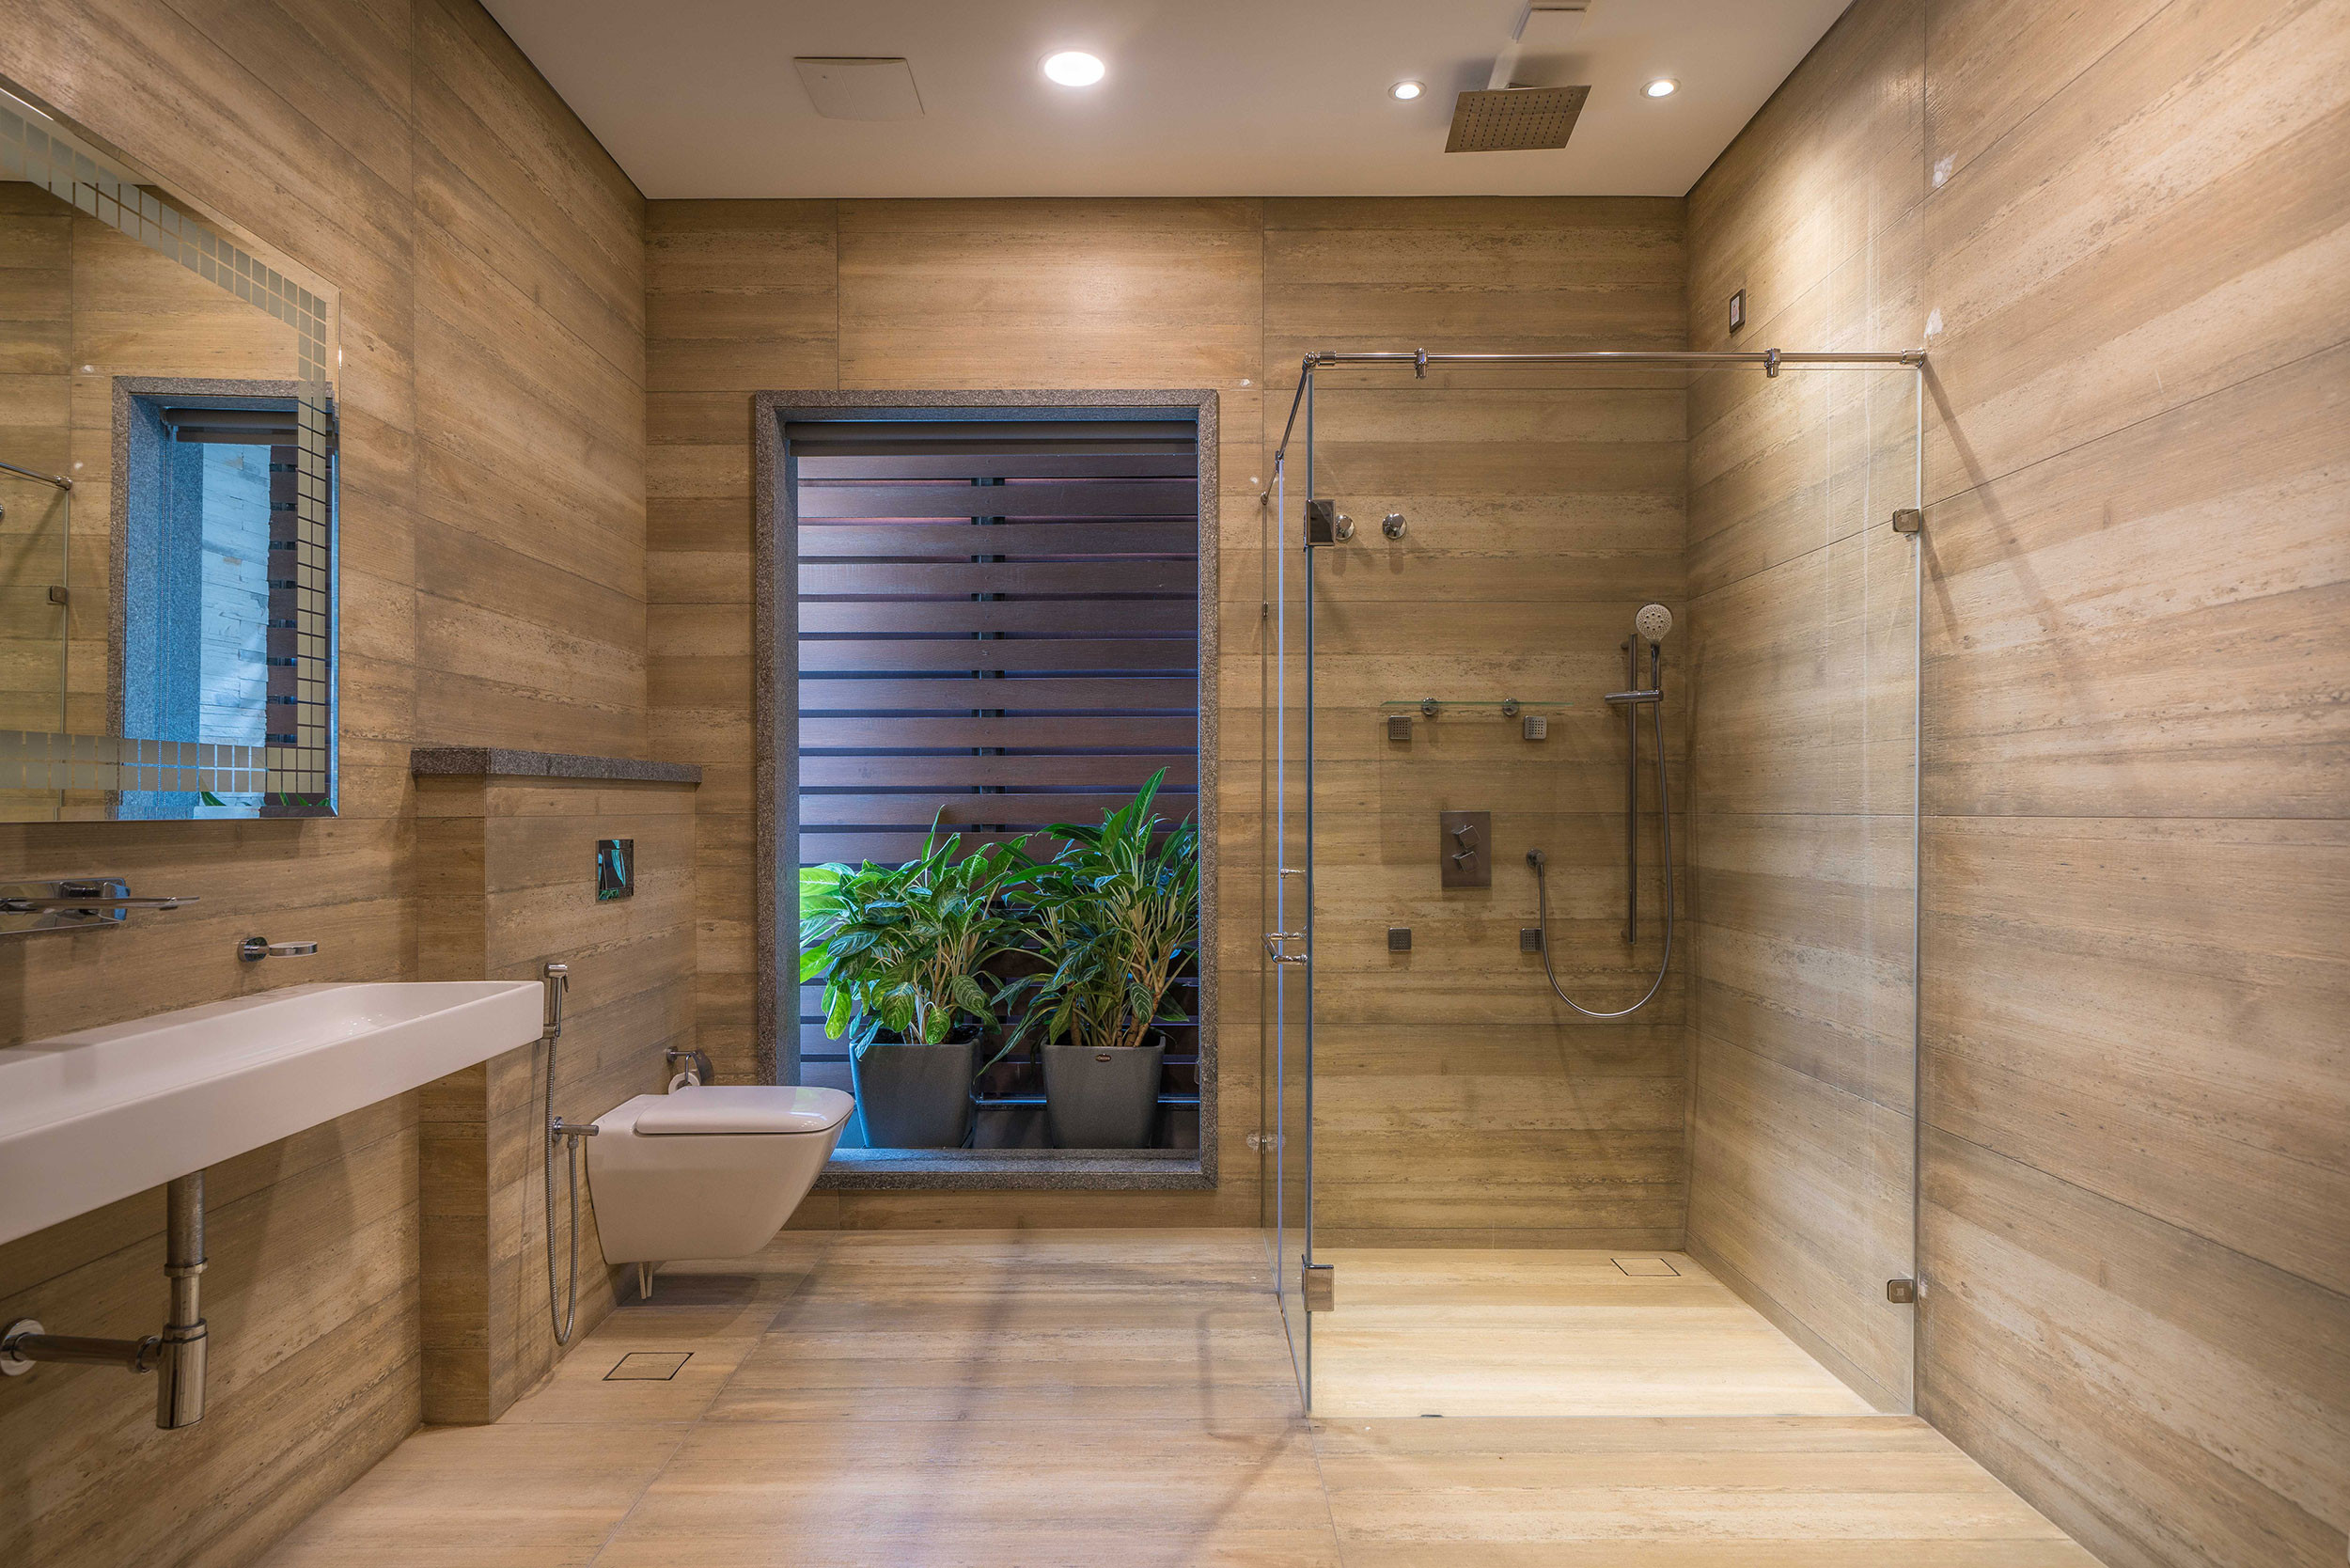 Bathroom Designs India
 Bathroom Designs in India Top 10 spaces featured on AD